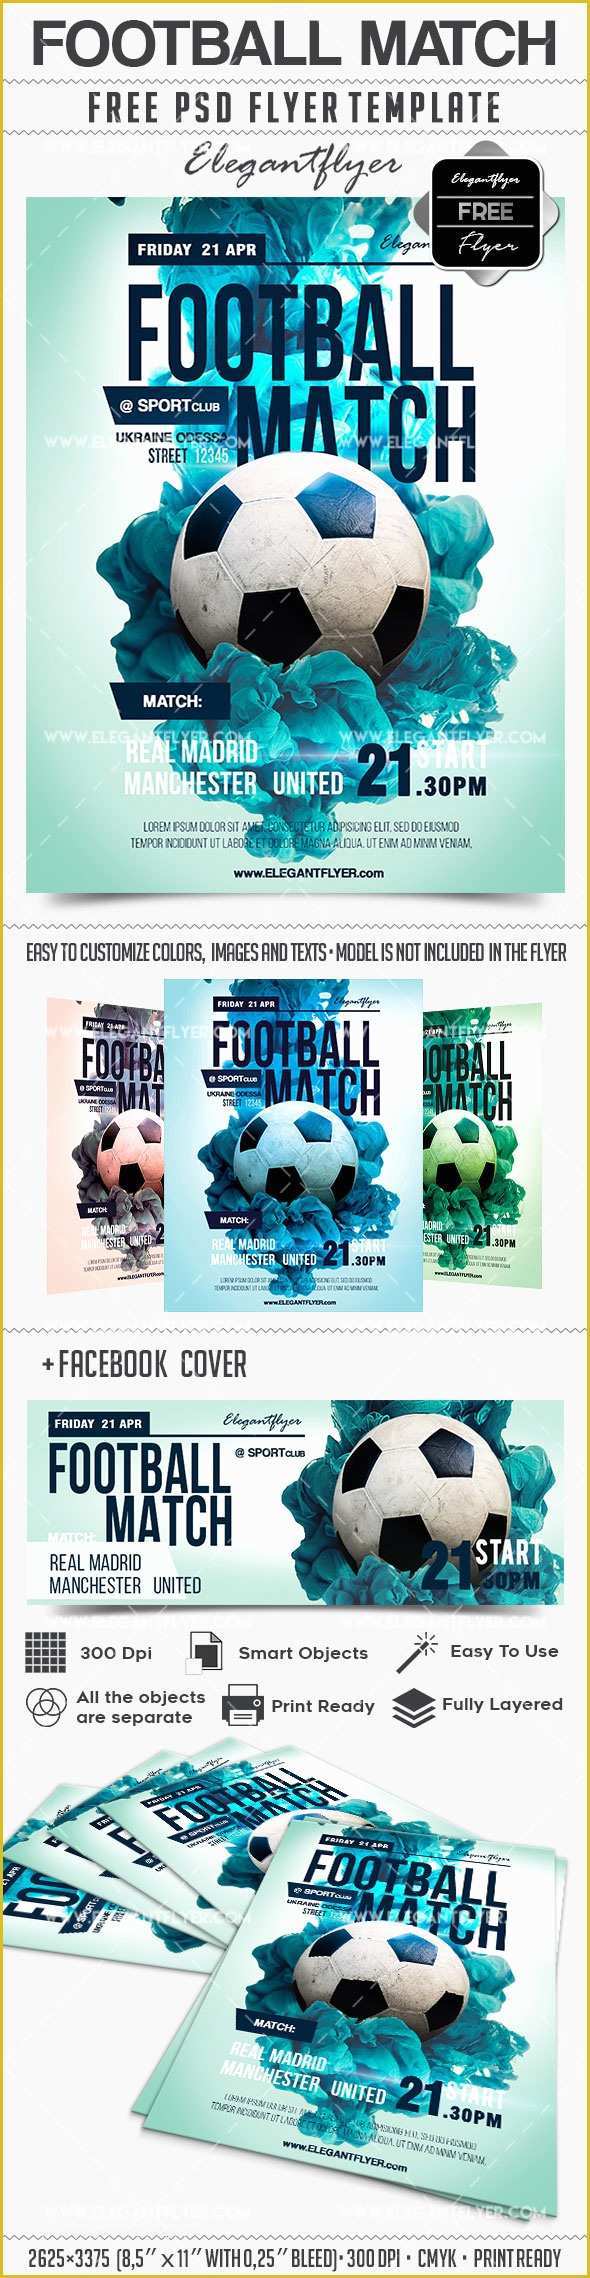 Free Football Flyer Design Templates Of Football Match Flyer In Psd – by Elegantflyer